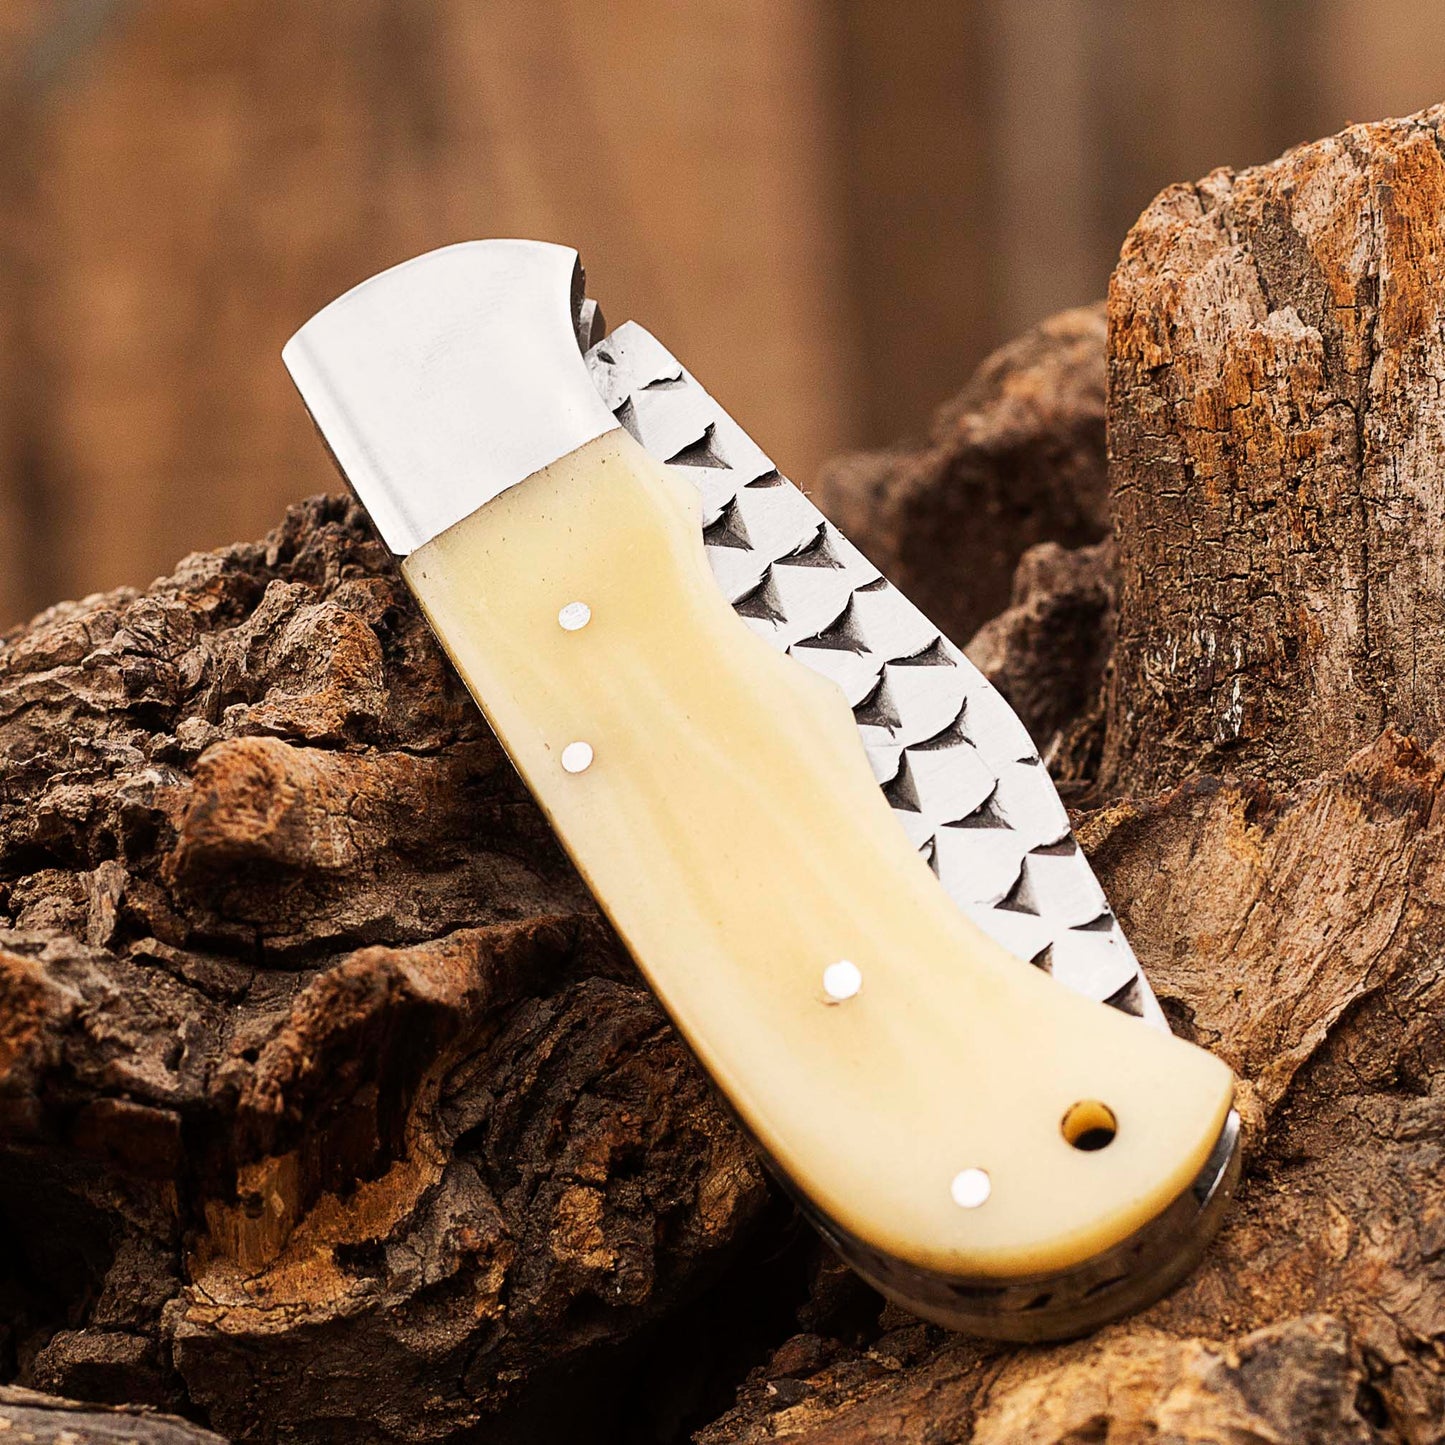 Custom Handmade 1095 Stainless Steel Pocket Most Beautiful Folding Knife Camel Bone Handle, Pocket Outdoor Liner-Lock Knife, Leather Sheath